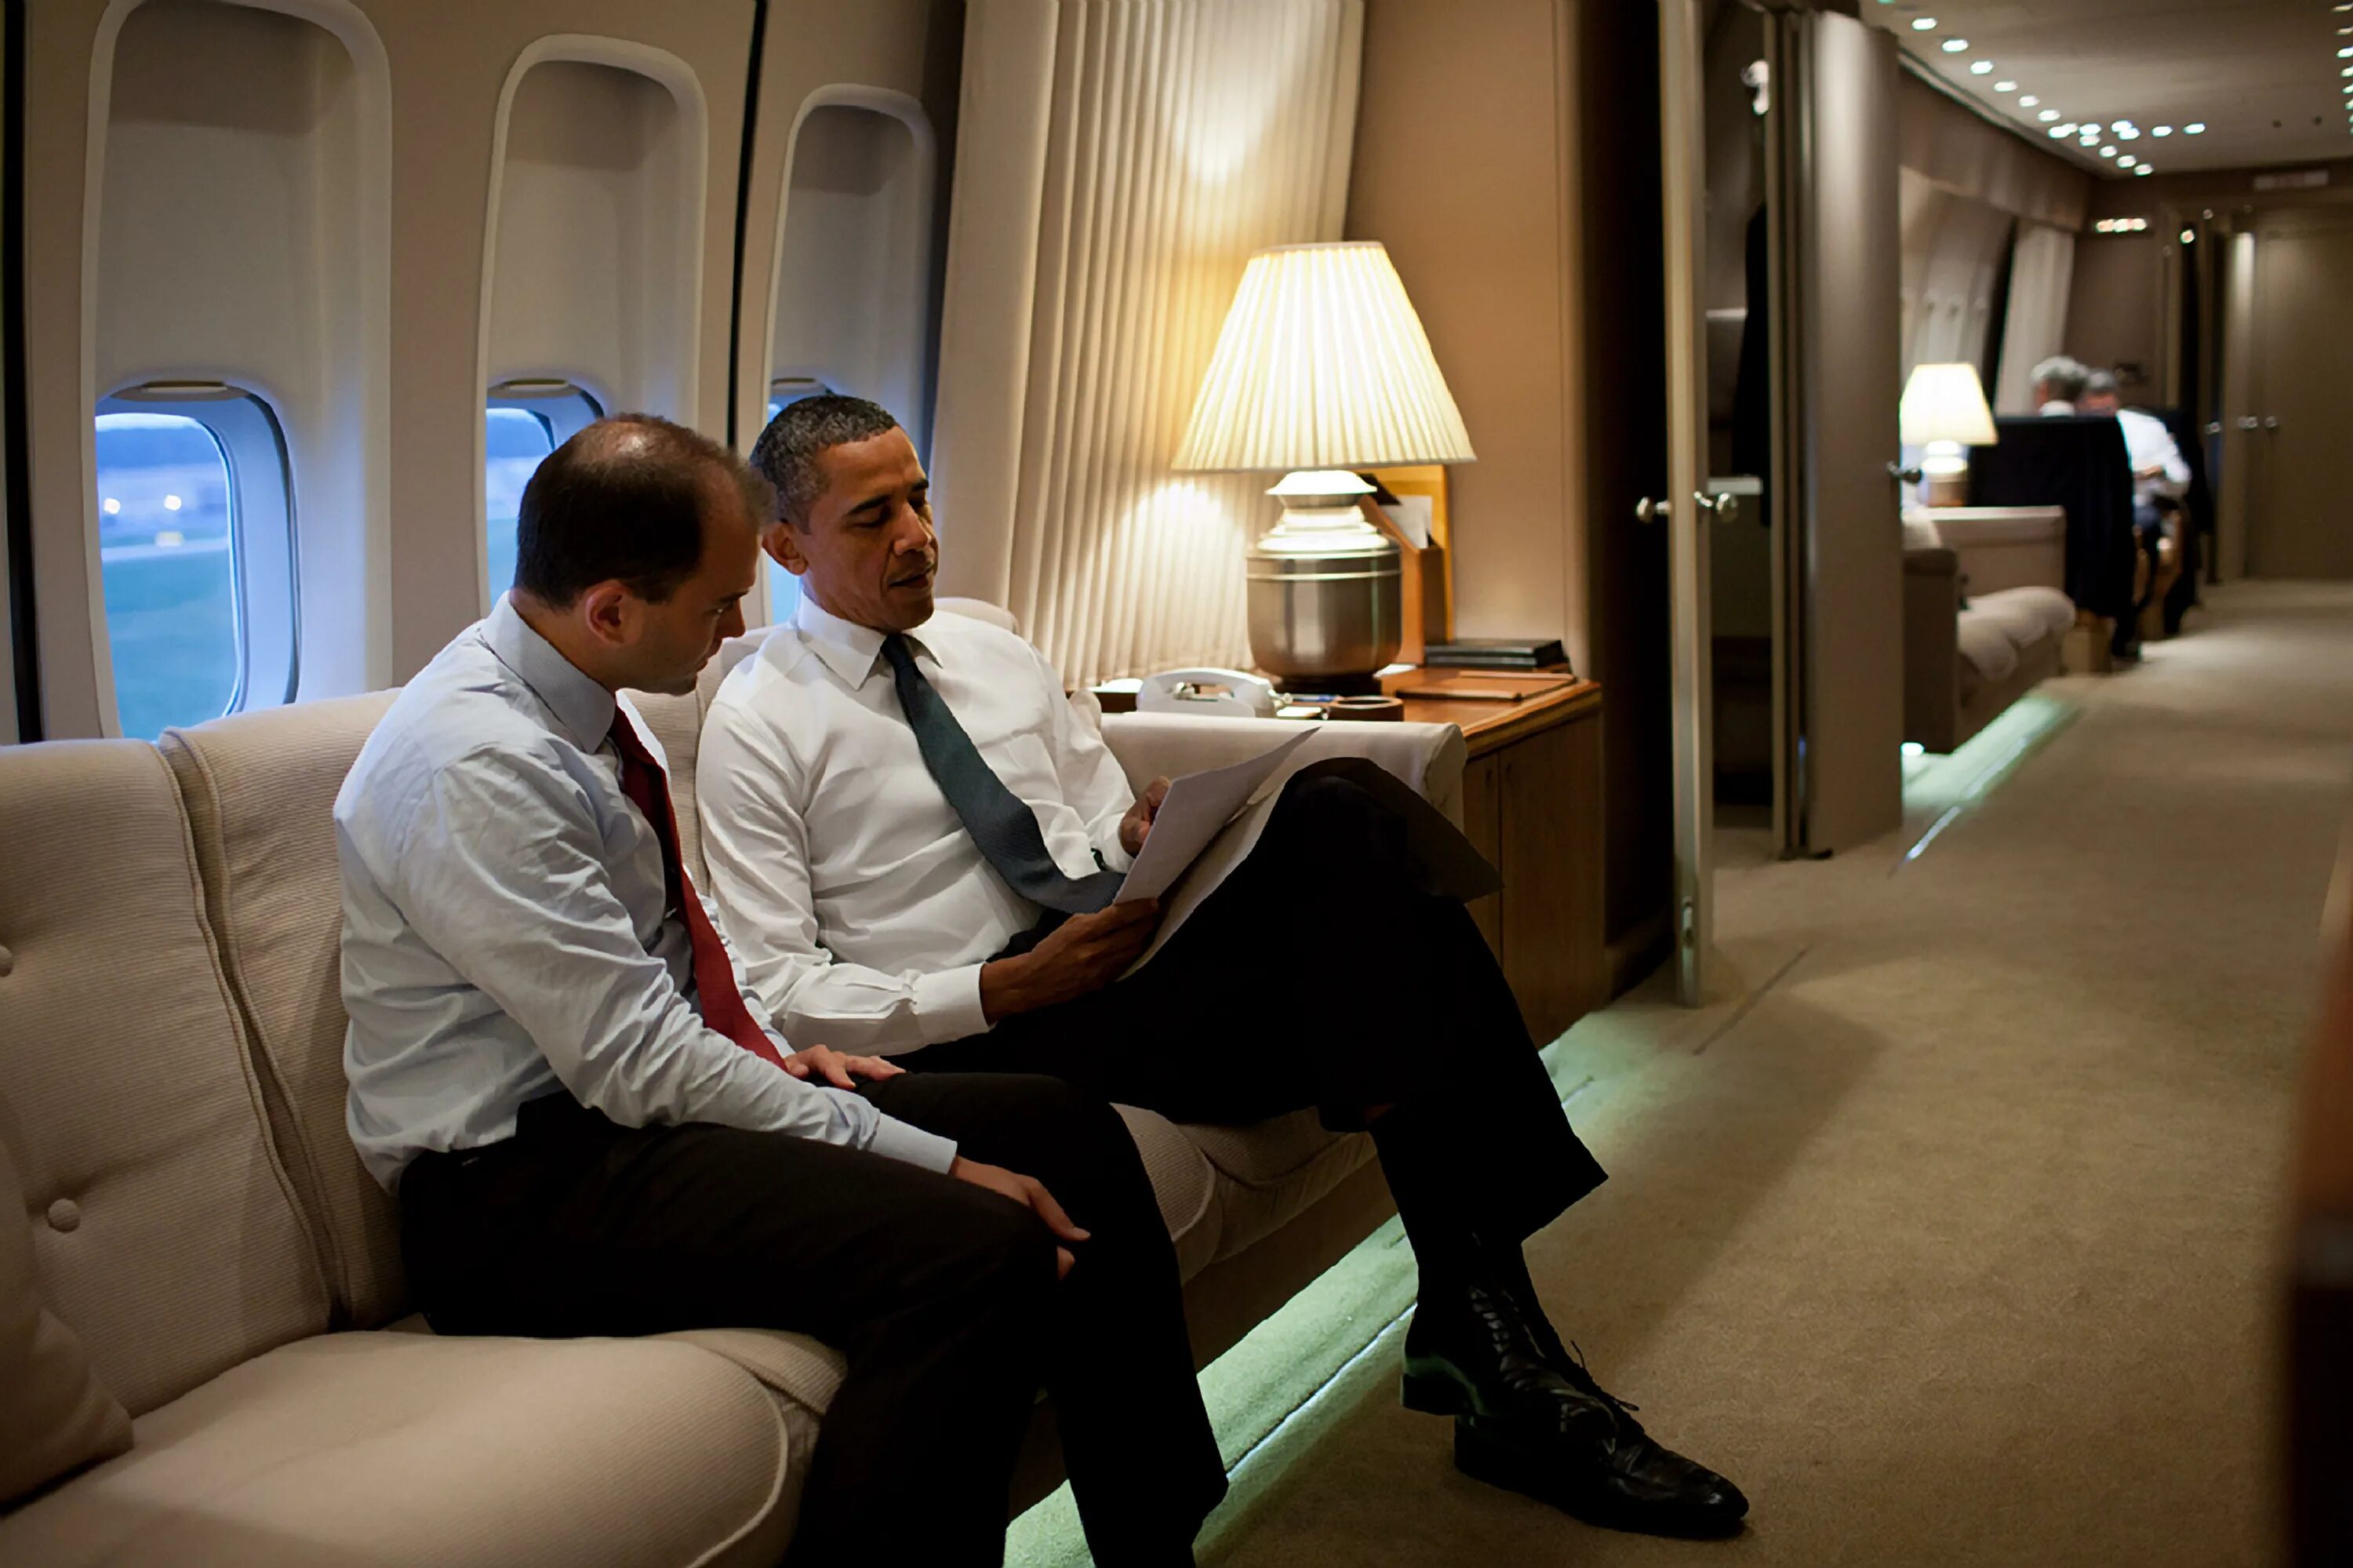 Президентский самолет. Борт 1 президента США. Самолет Путина борт номер 1. Борт номер 1 президента США внутри. Барак Обама в самолете.